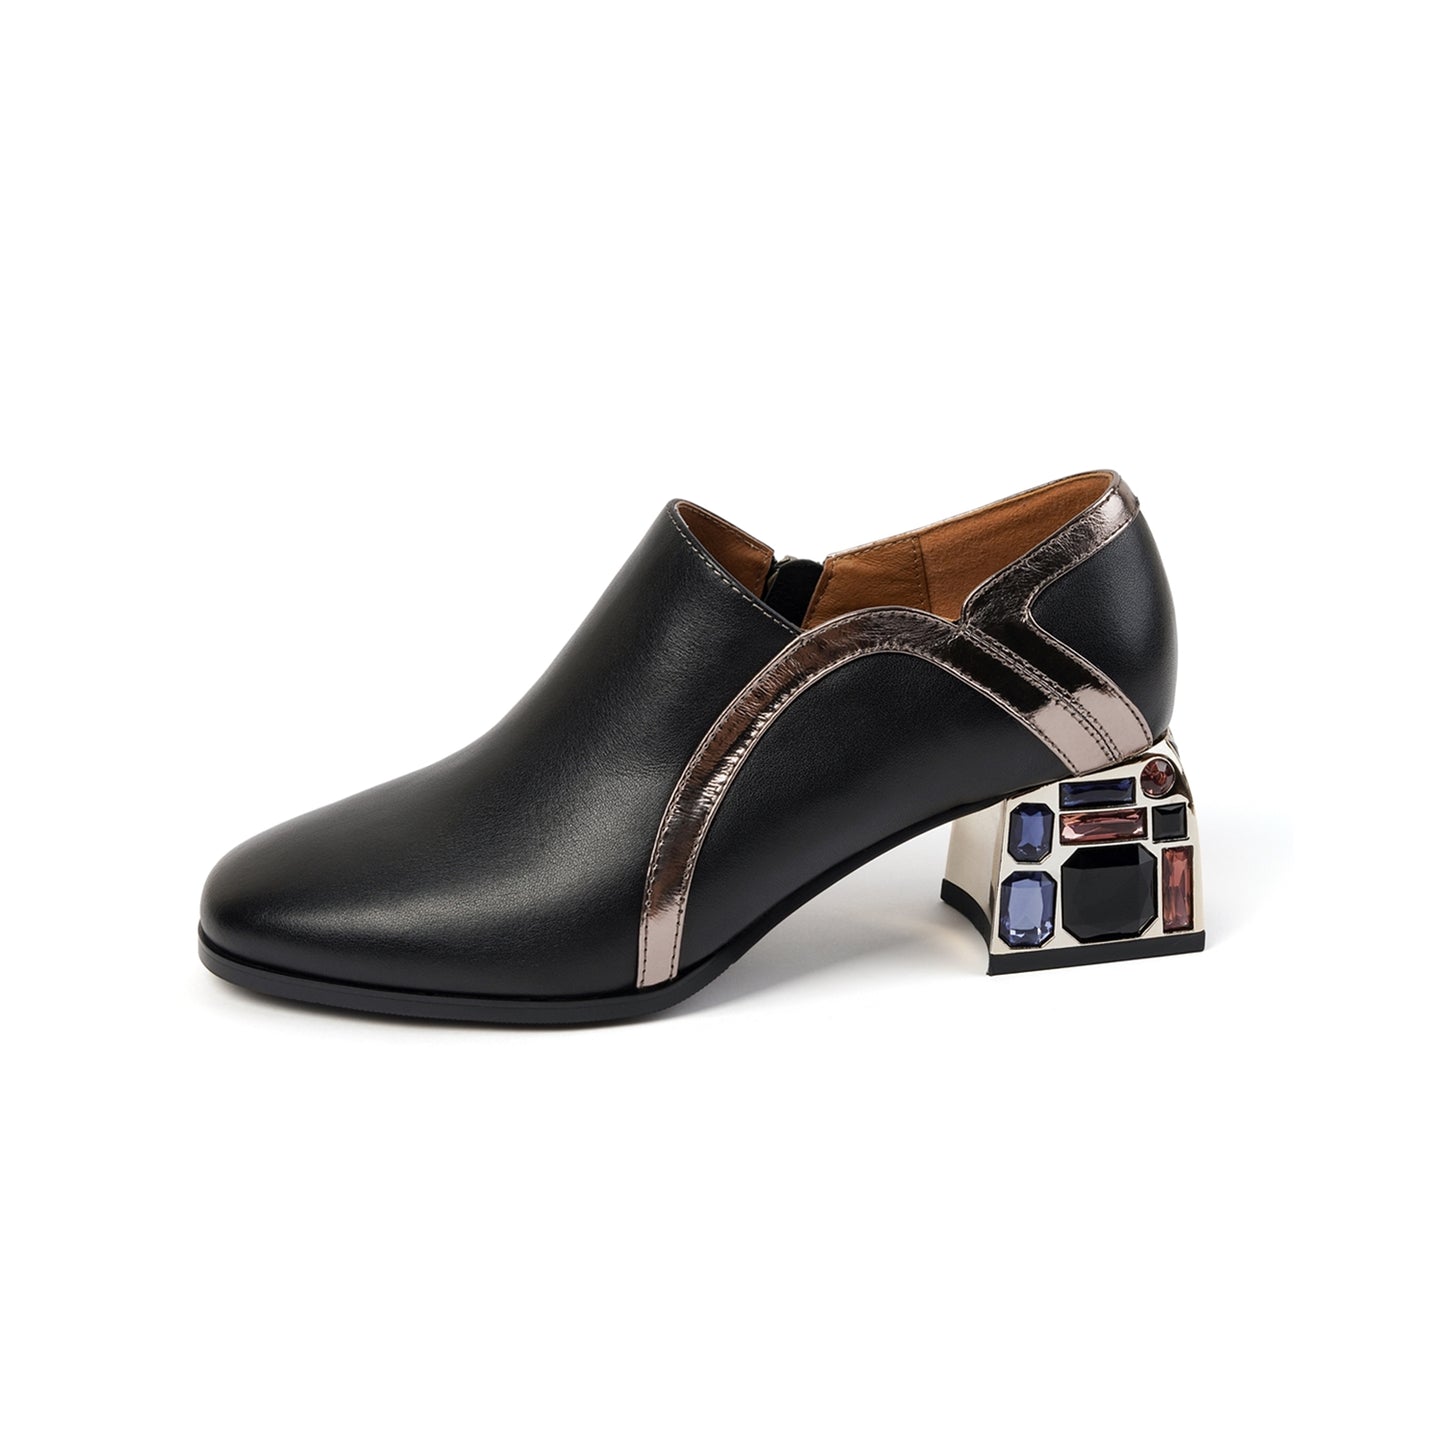 TinaCus Handmade Women's Genuine Leather Crystal Side Zipper Round Toe Mid Block Heel Pumps Shoes